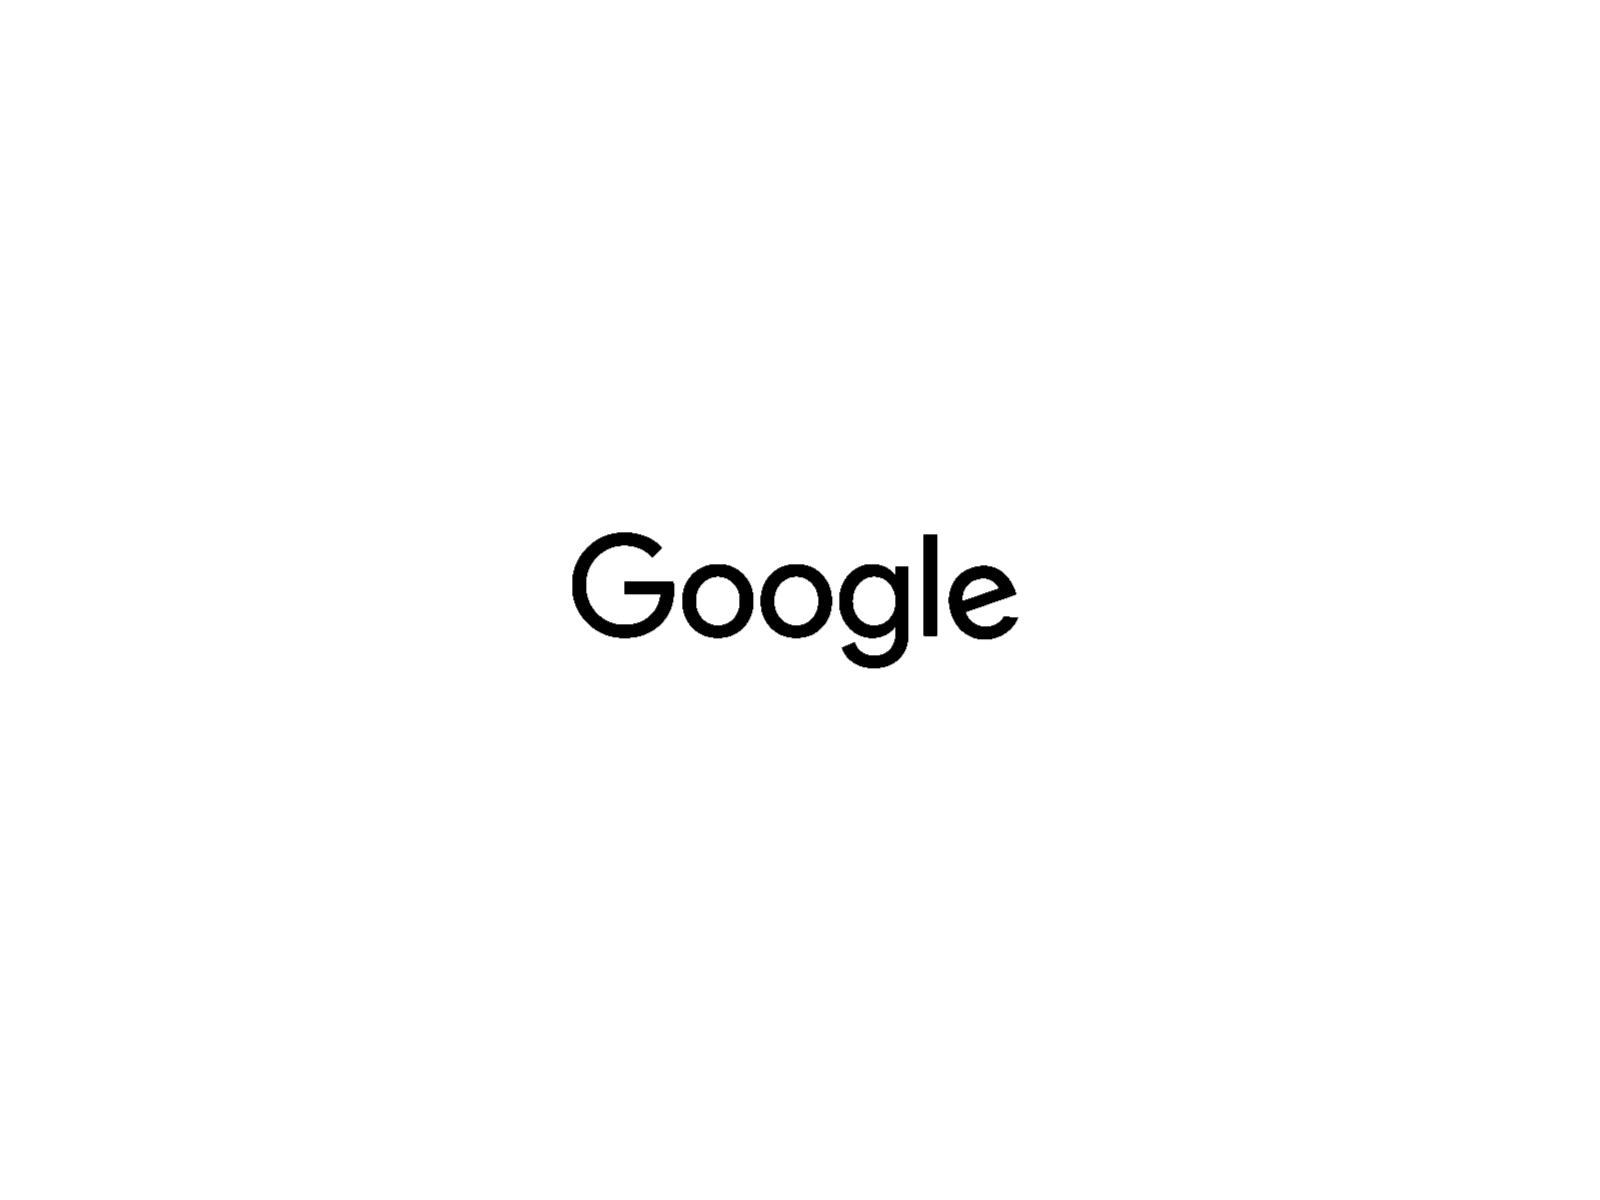 Google Play Logo Animation 2danimation gif google google logo animation google play logo google play logo google play logo animation google play logo animation logo logo animation logo design logo mark logotype